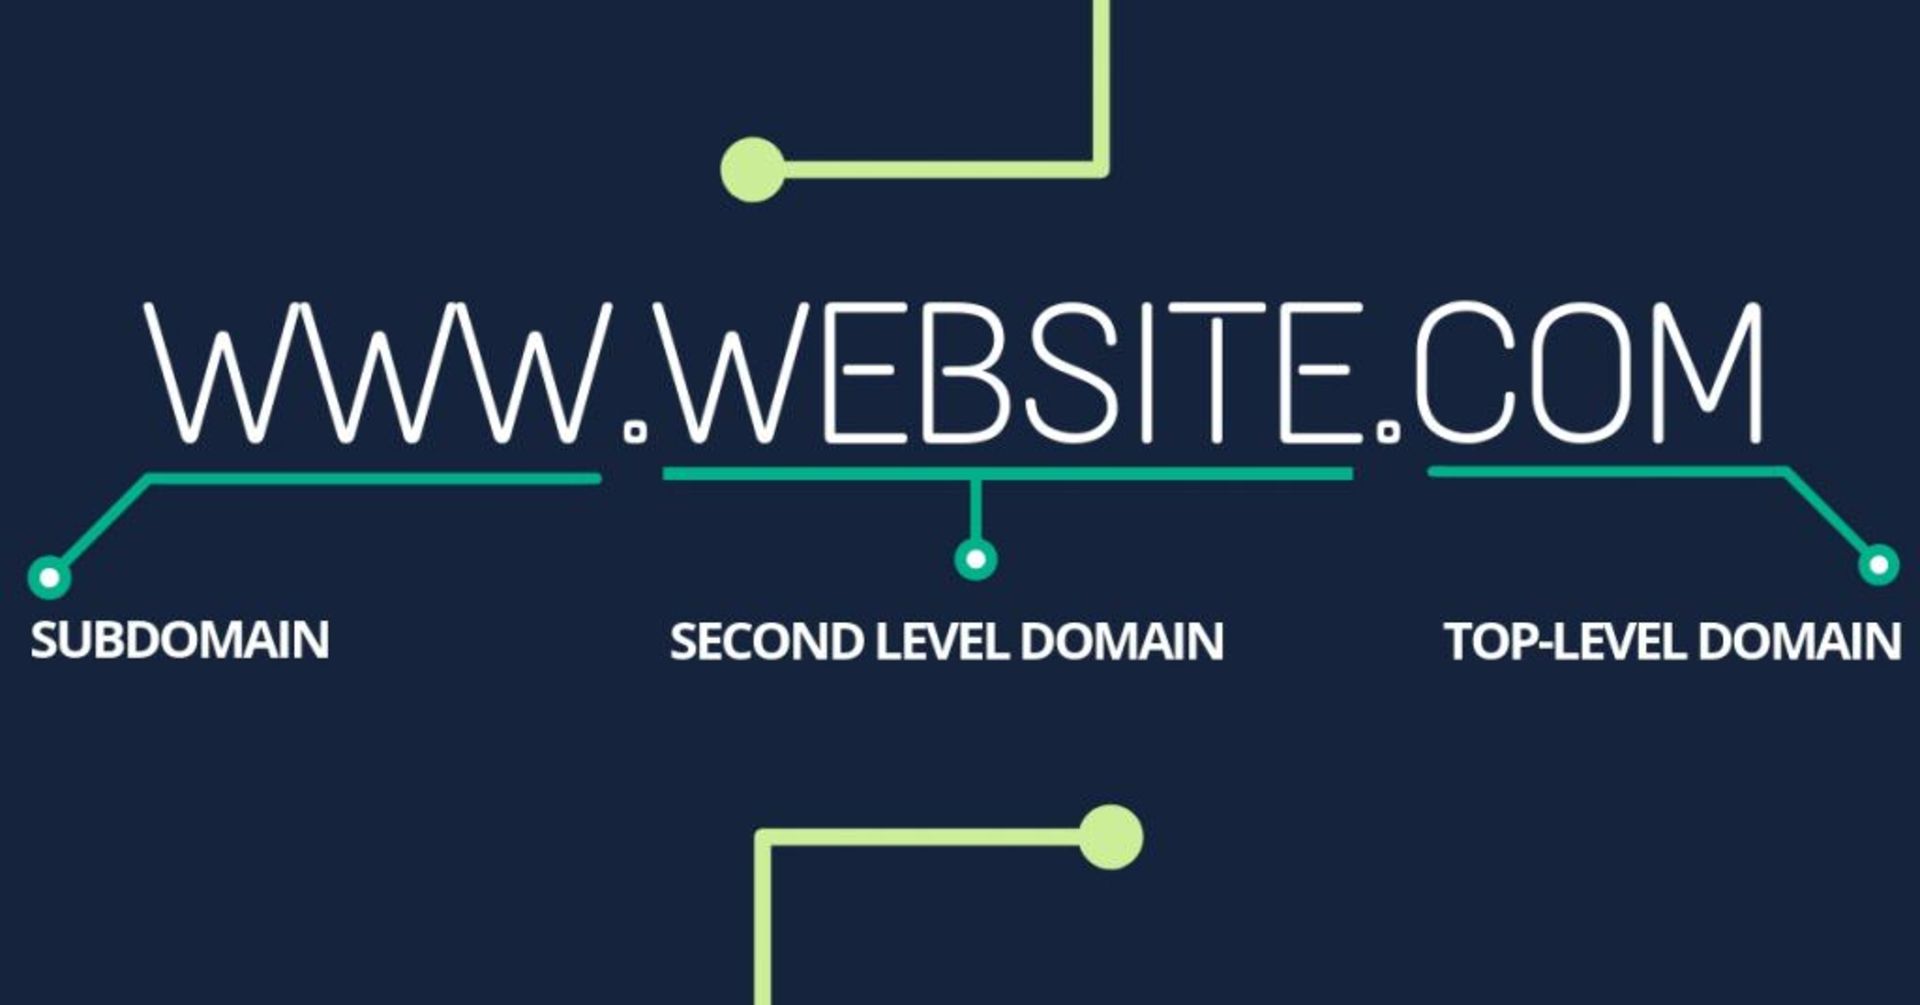 دامنه سطح پایین سطح بالا / subdomain second level domain top level domain